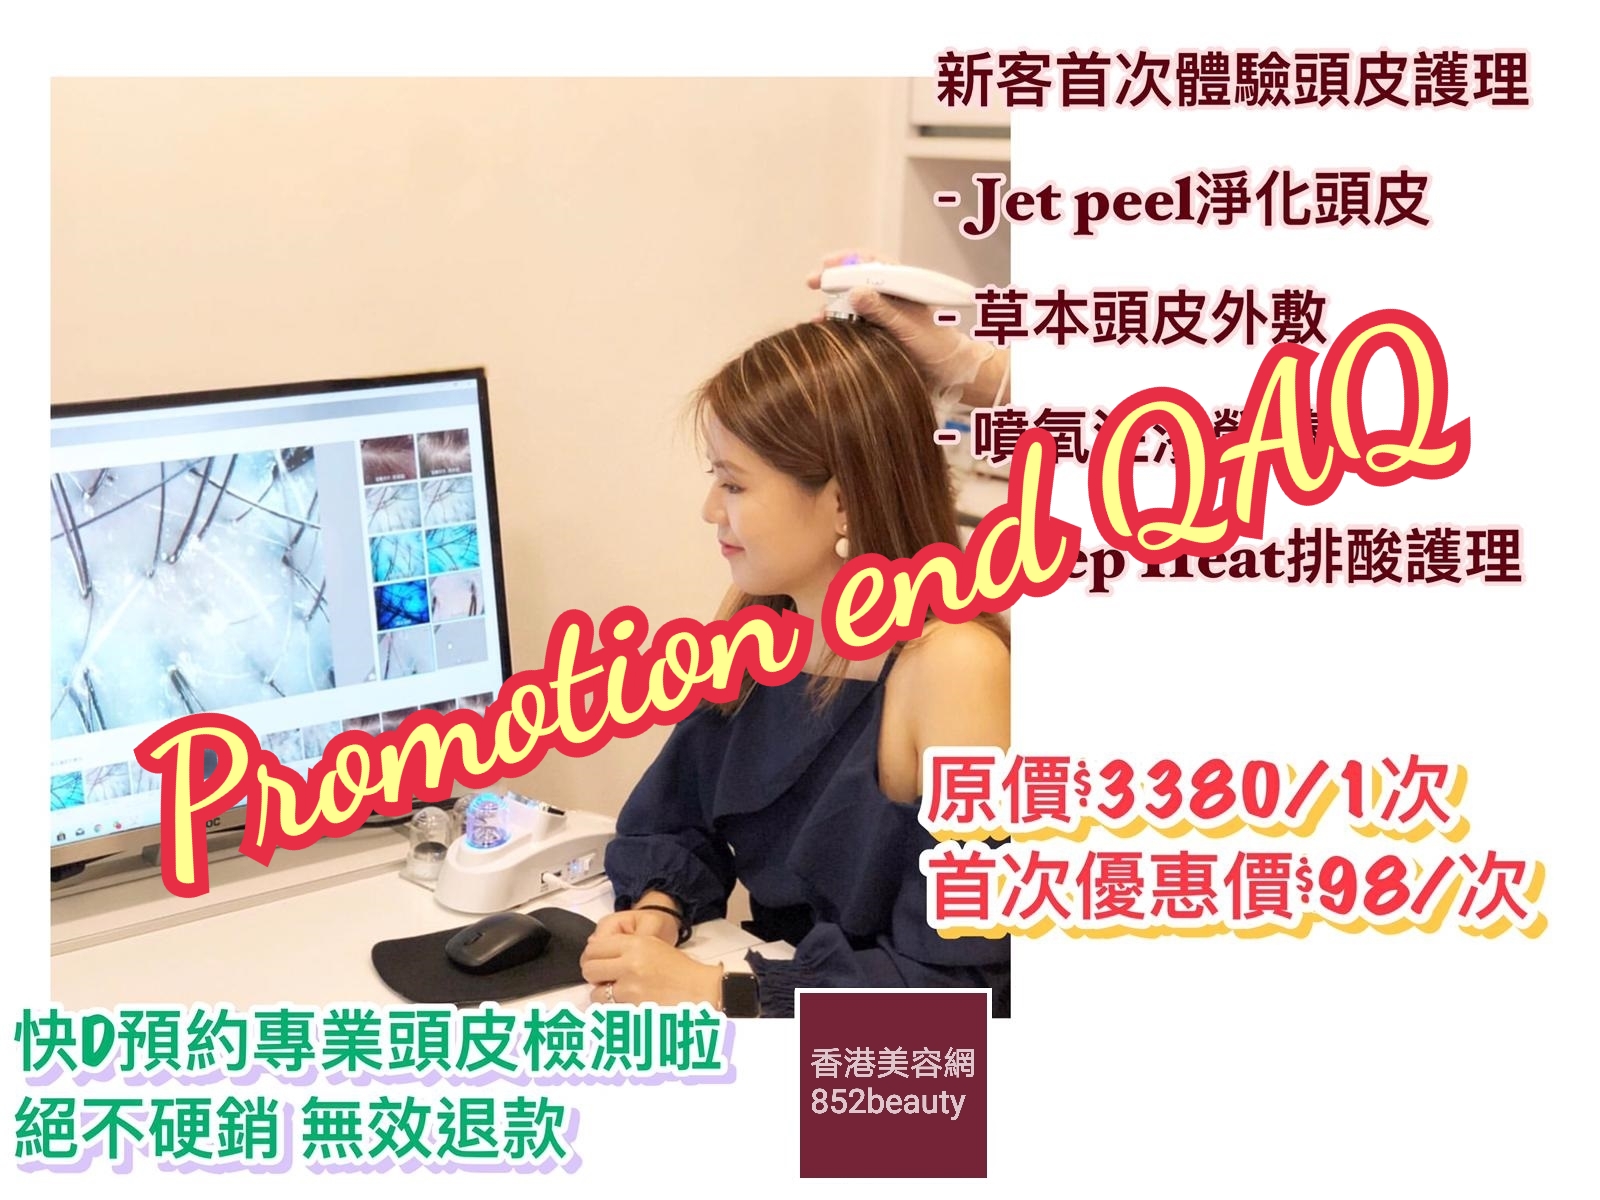 Hong Kong Beauty Salon Latest Beauty Discount: 美容優惠 - 尖沙咀區] 正視頭皮健康 $98大優惠套裝 (已結束)